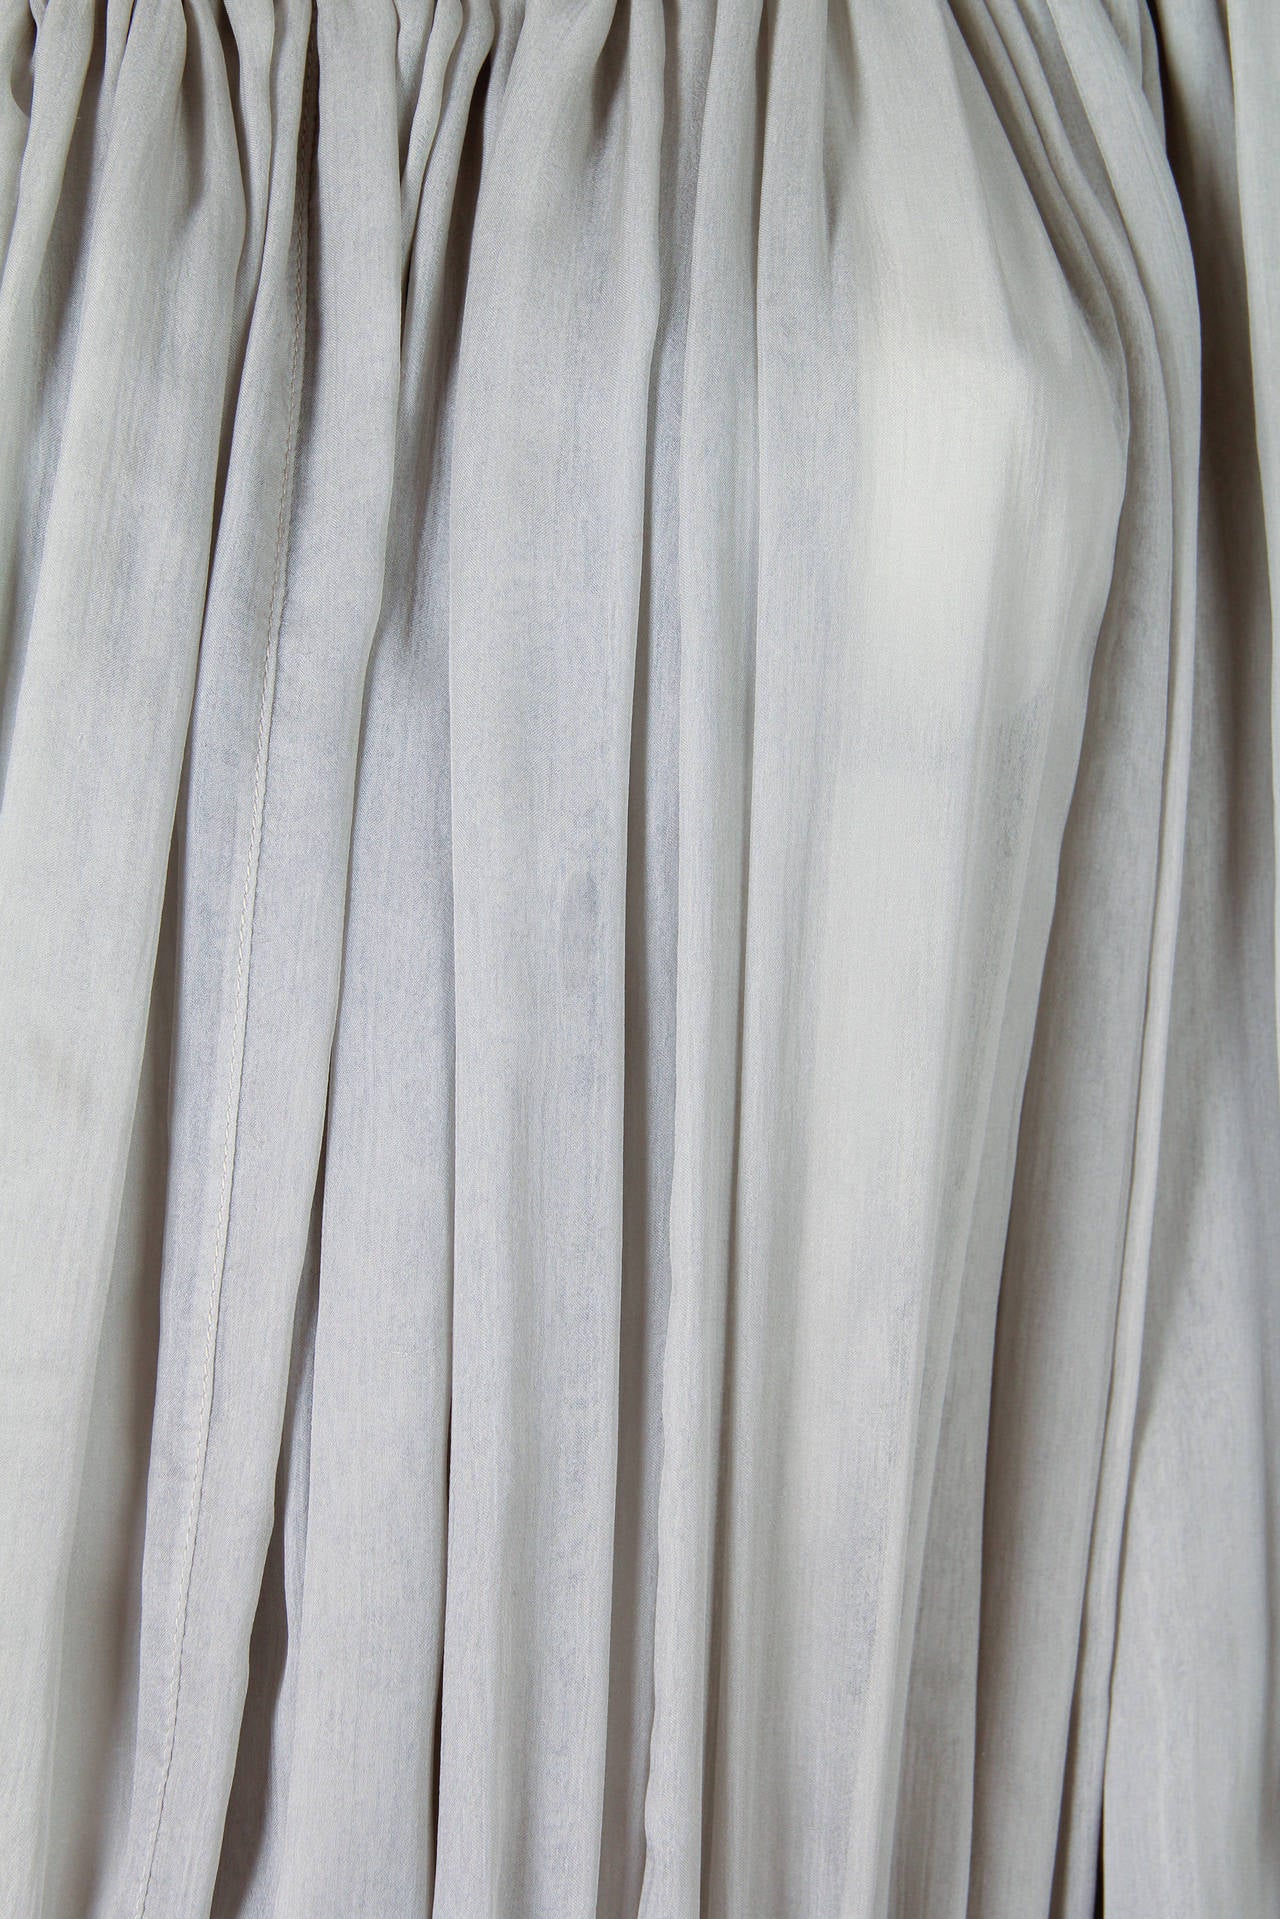 1980S GEOFFREY BEENE Cream & Grey Silk Chiffon Crepe Dress With Metallic Details 4